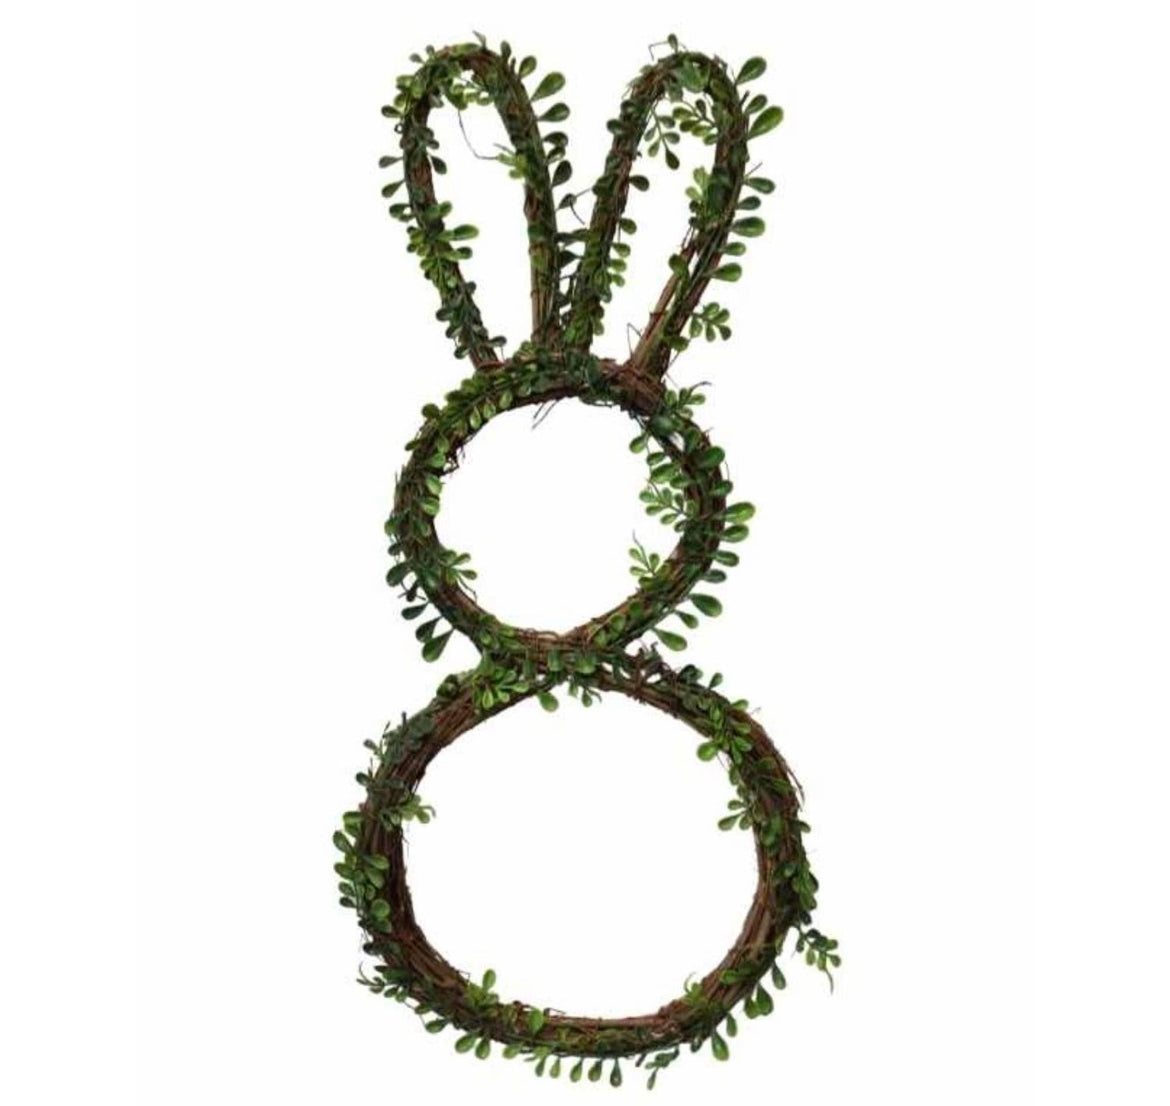 Blooming bunny wreath